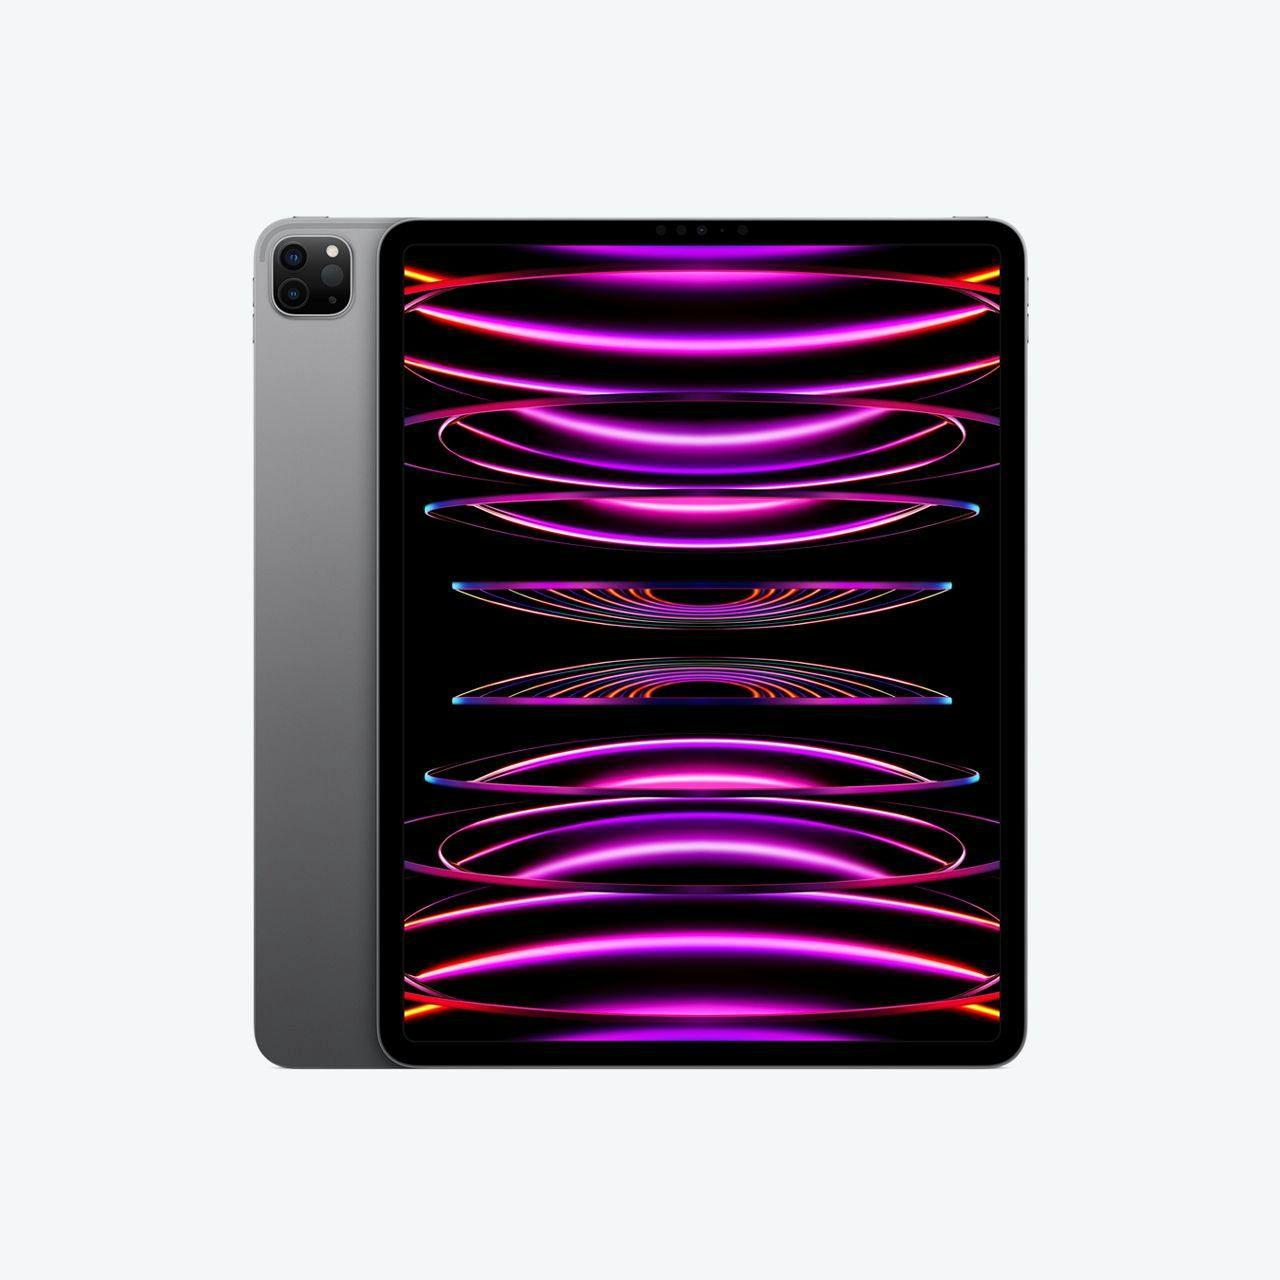 Image of iPad Pro 12.9-inch (6th Generation).